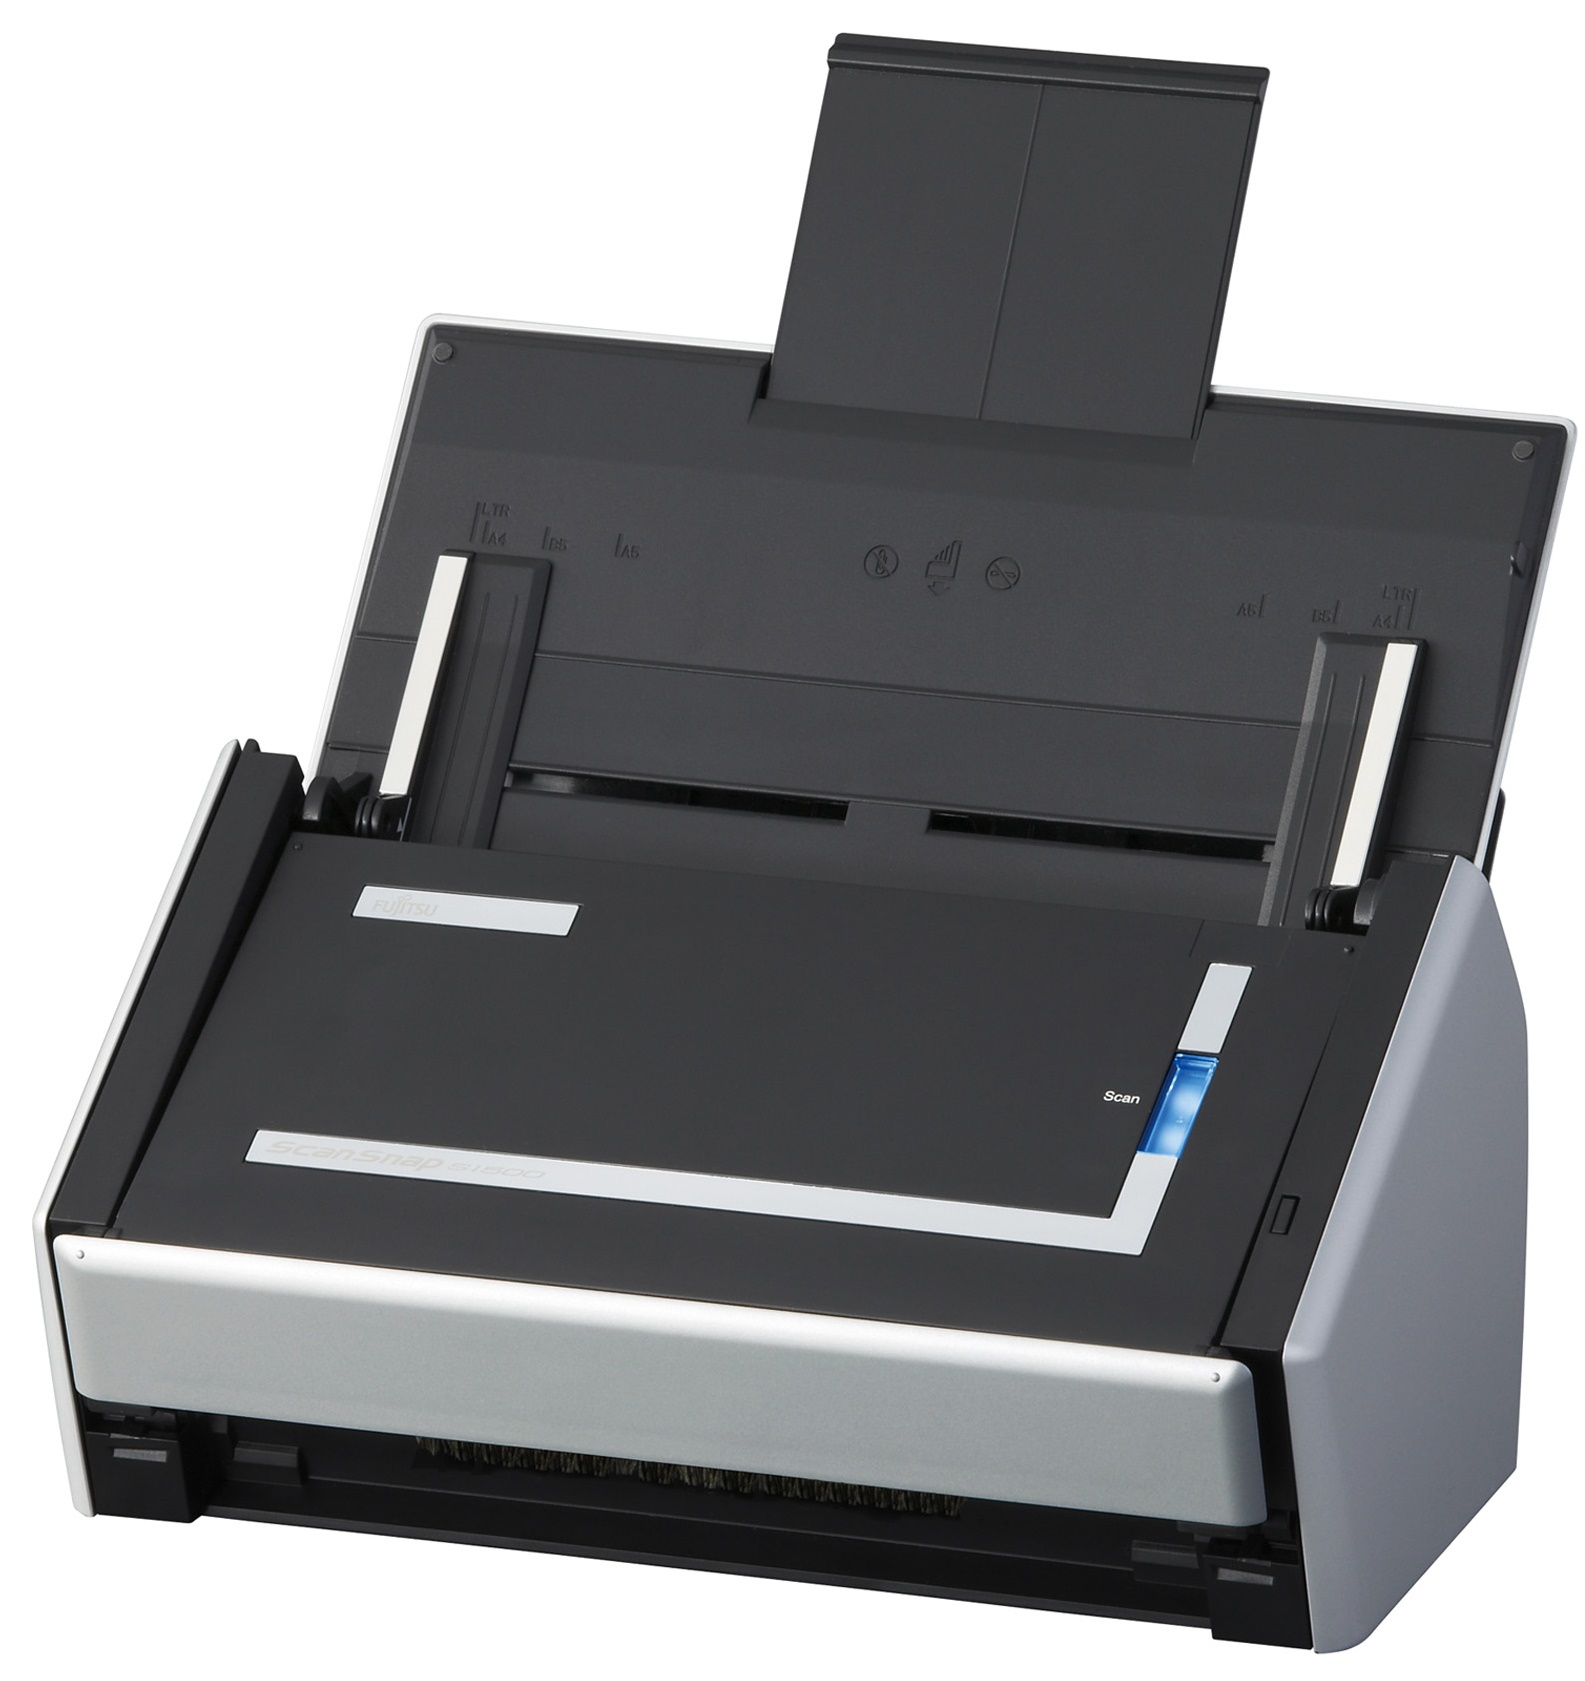 fujitsu scansnap s1300 document scanner